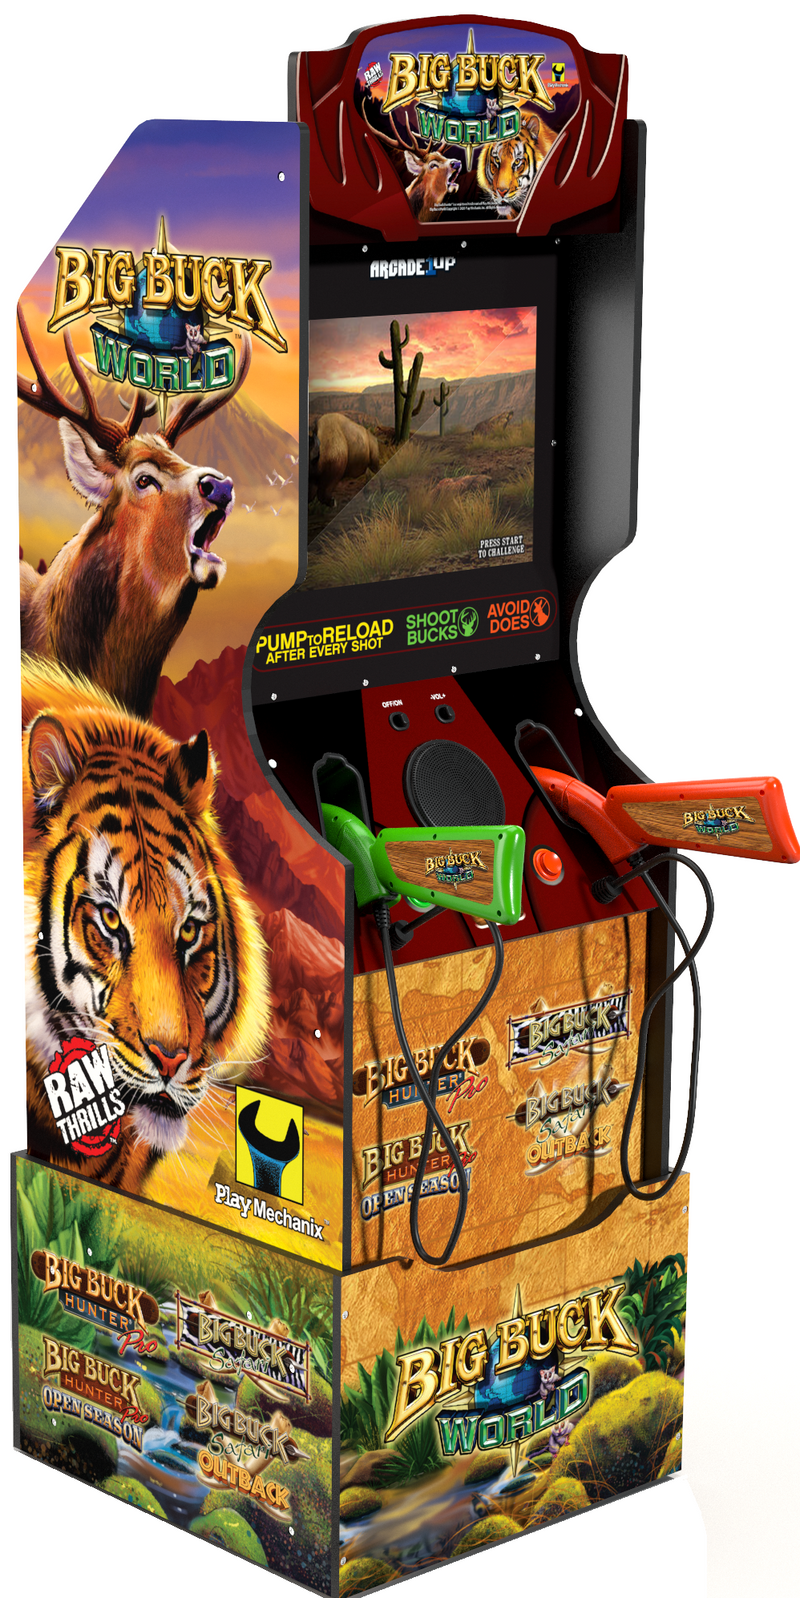 Arcade1Up Arcade Cabinet - Arcade1Up Big Buck World™ Arcade Cabinet with Riser 